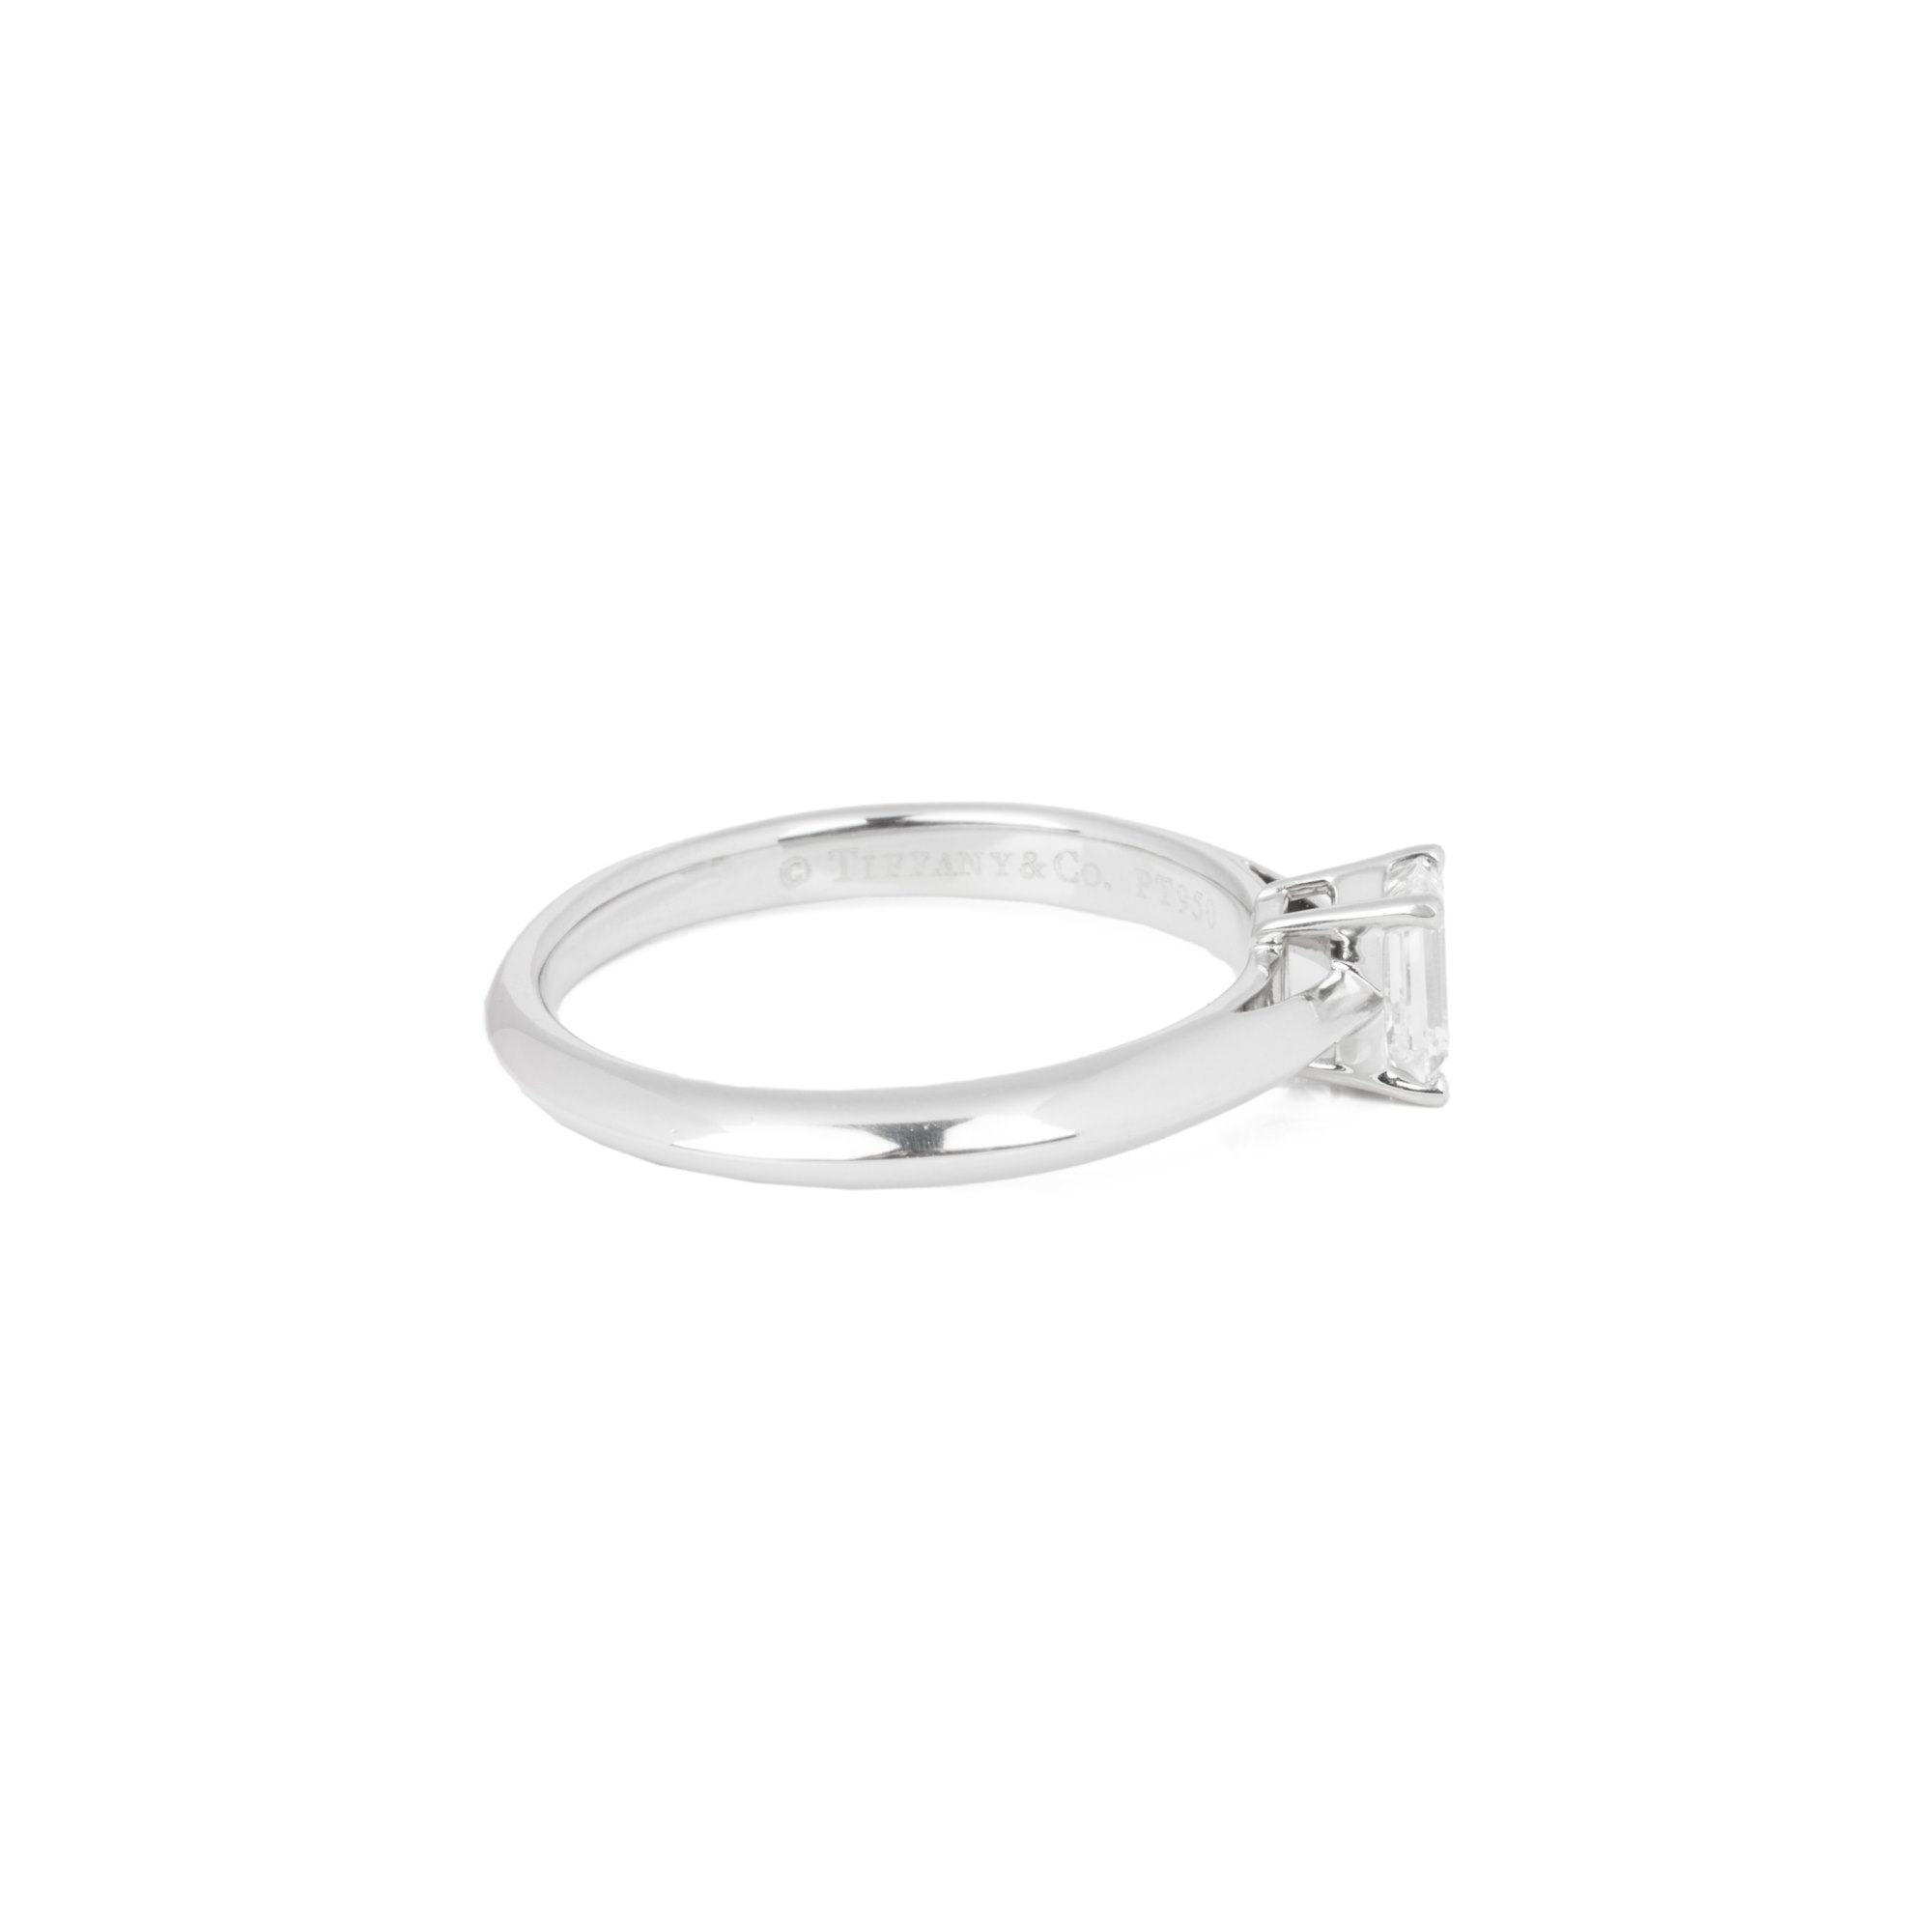 Tiffany & Co. 0.31ct Emerald Cut Diamond Solitaire Ring